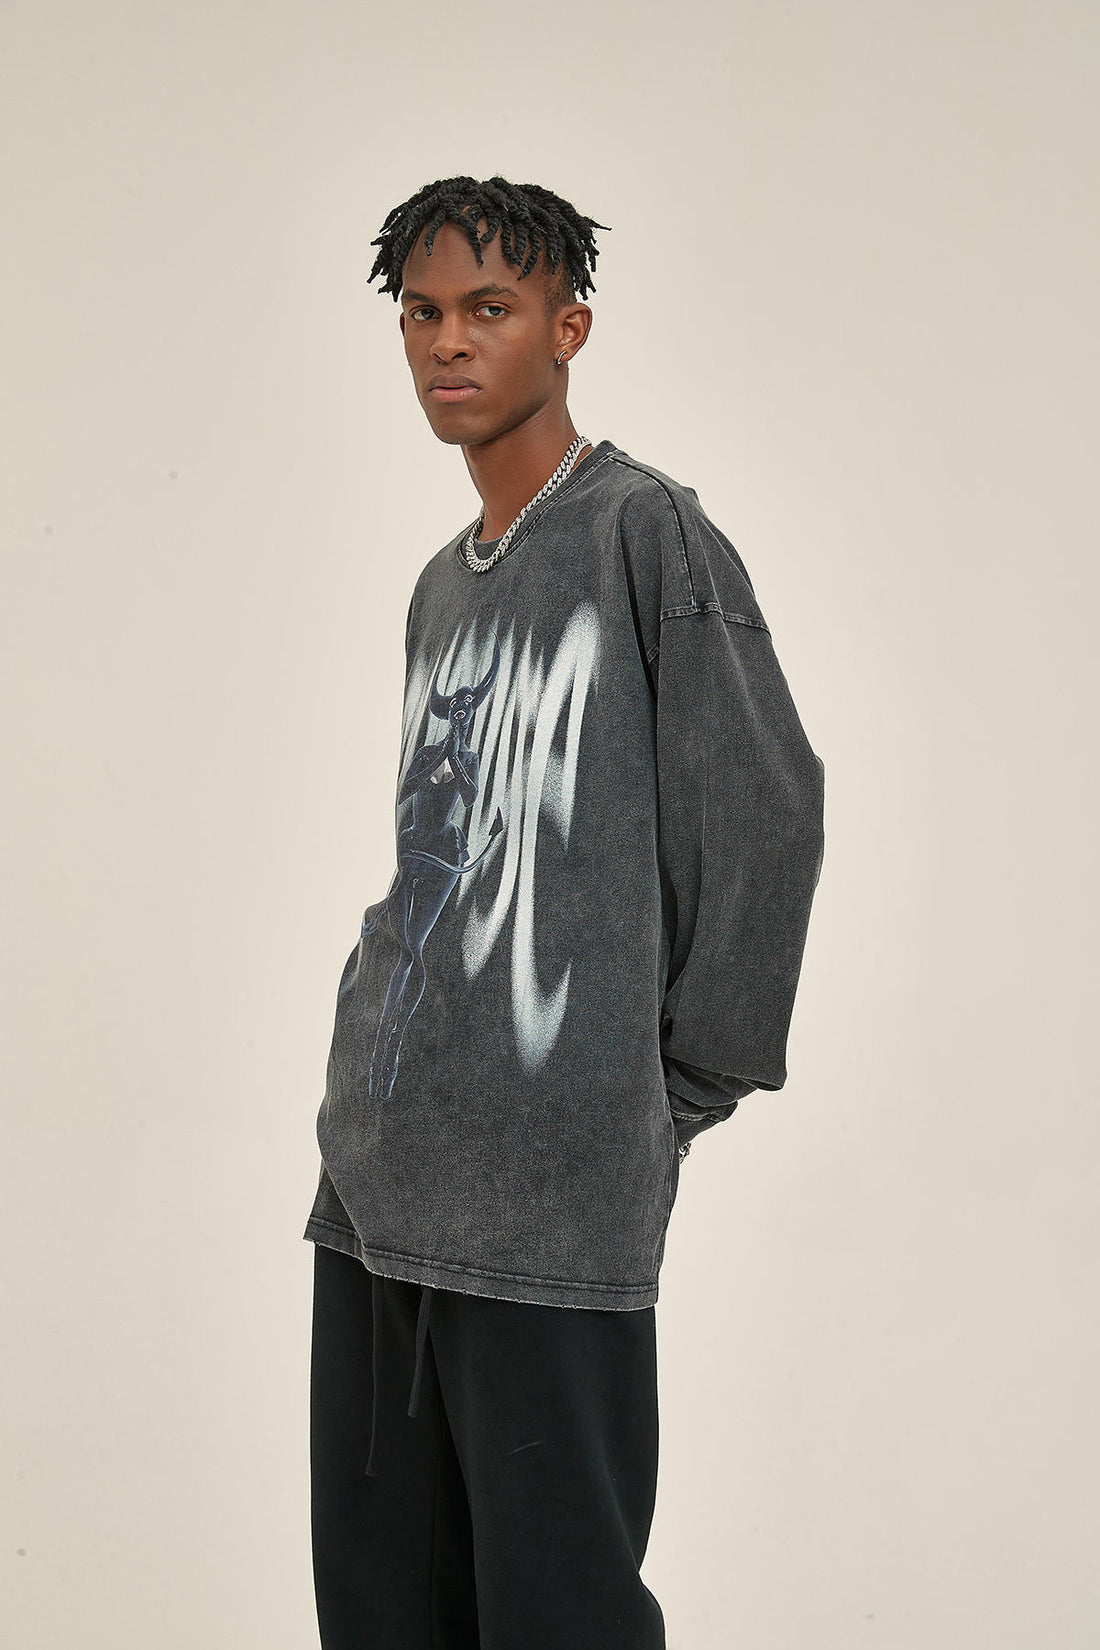 250G Portrait Print Men Long-Sleeved Sweatshirt